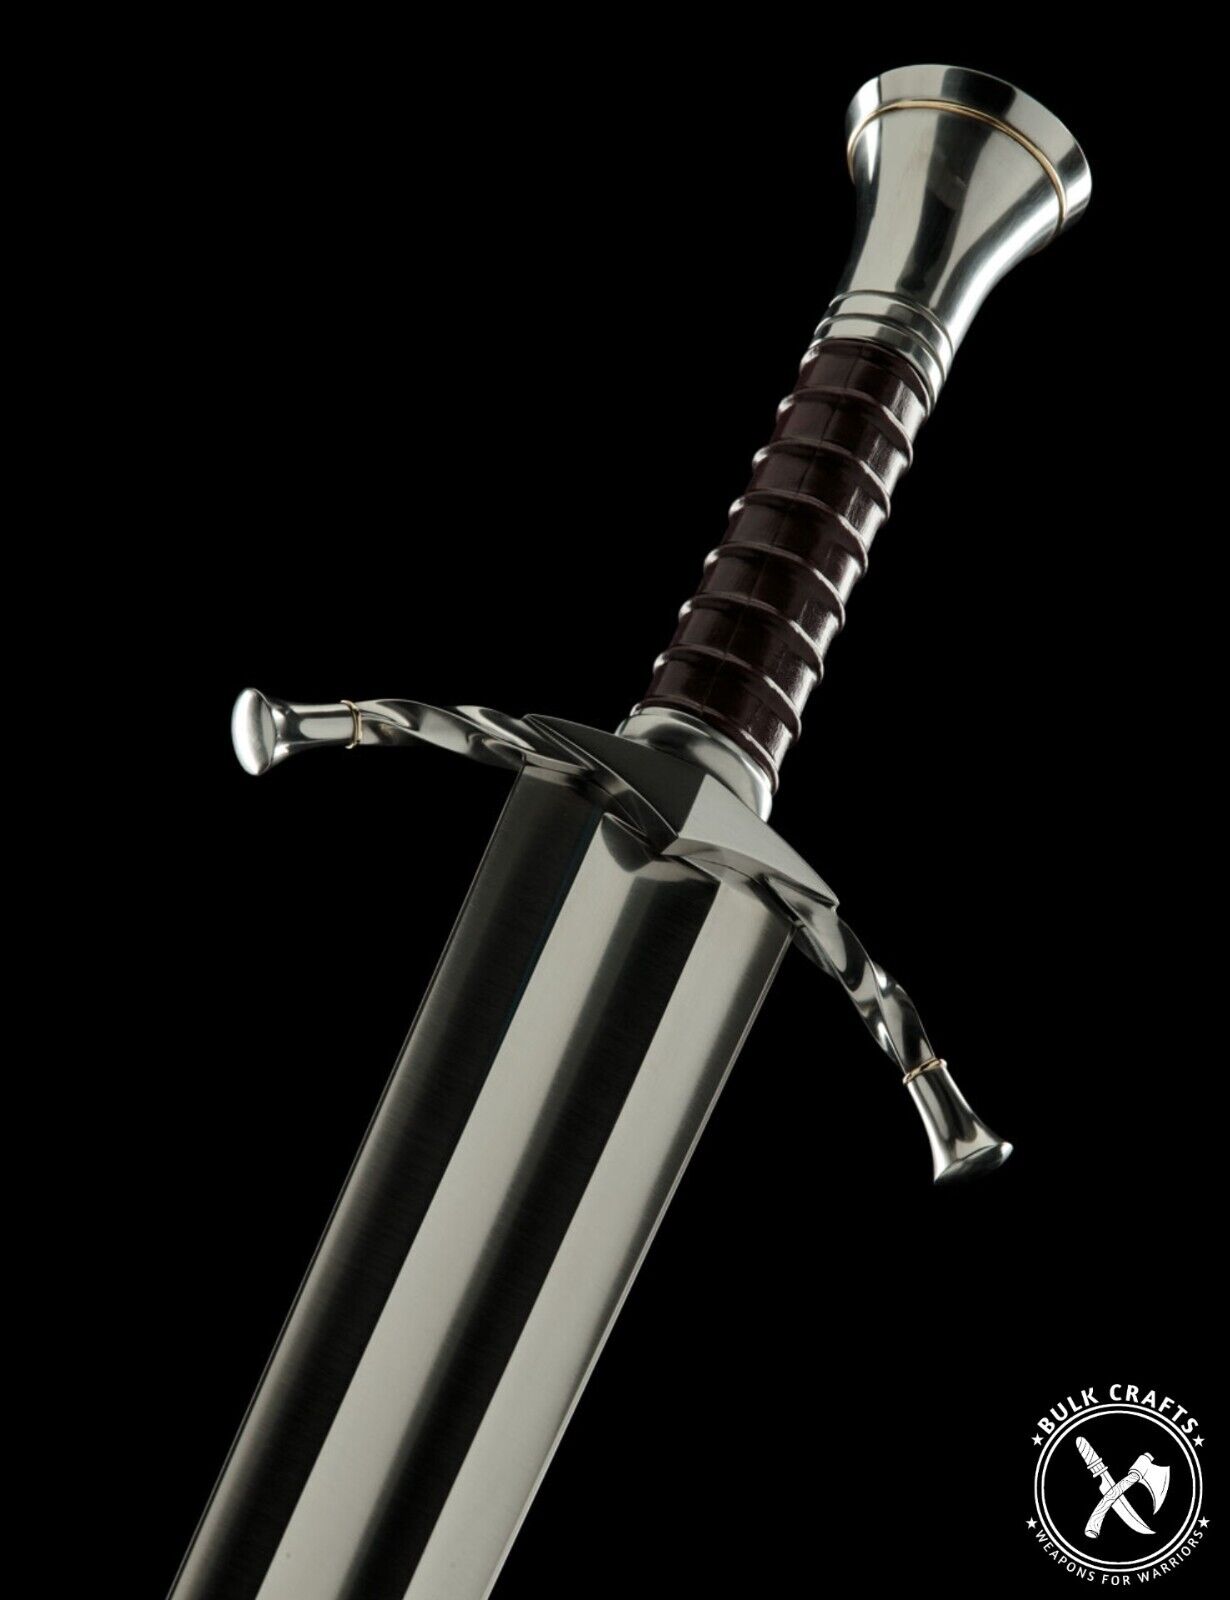 Handmade Sword of Boromir Battle Ready LOTR Swords made with 1065 carbon steel